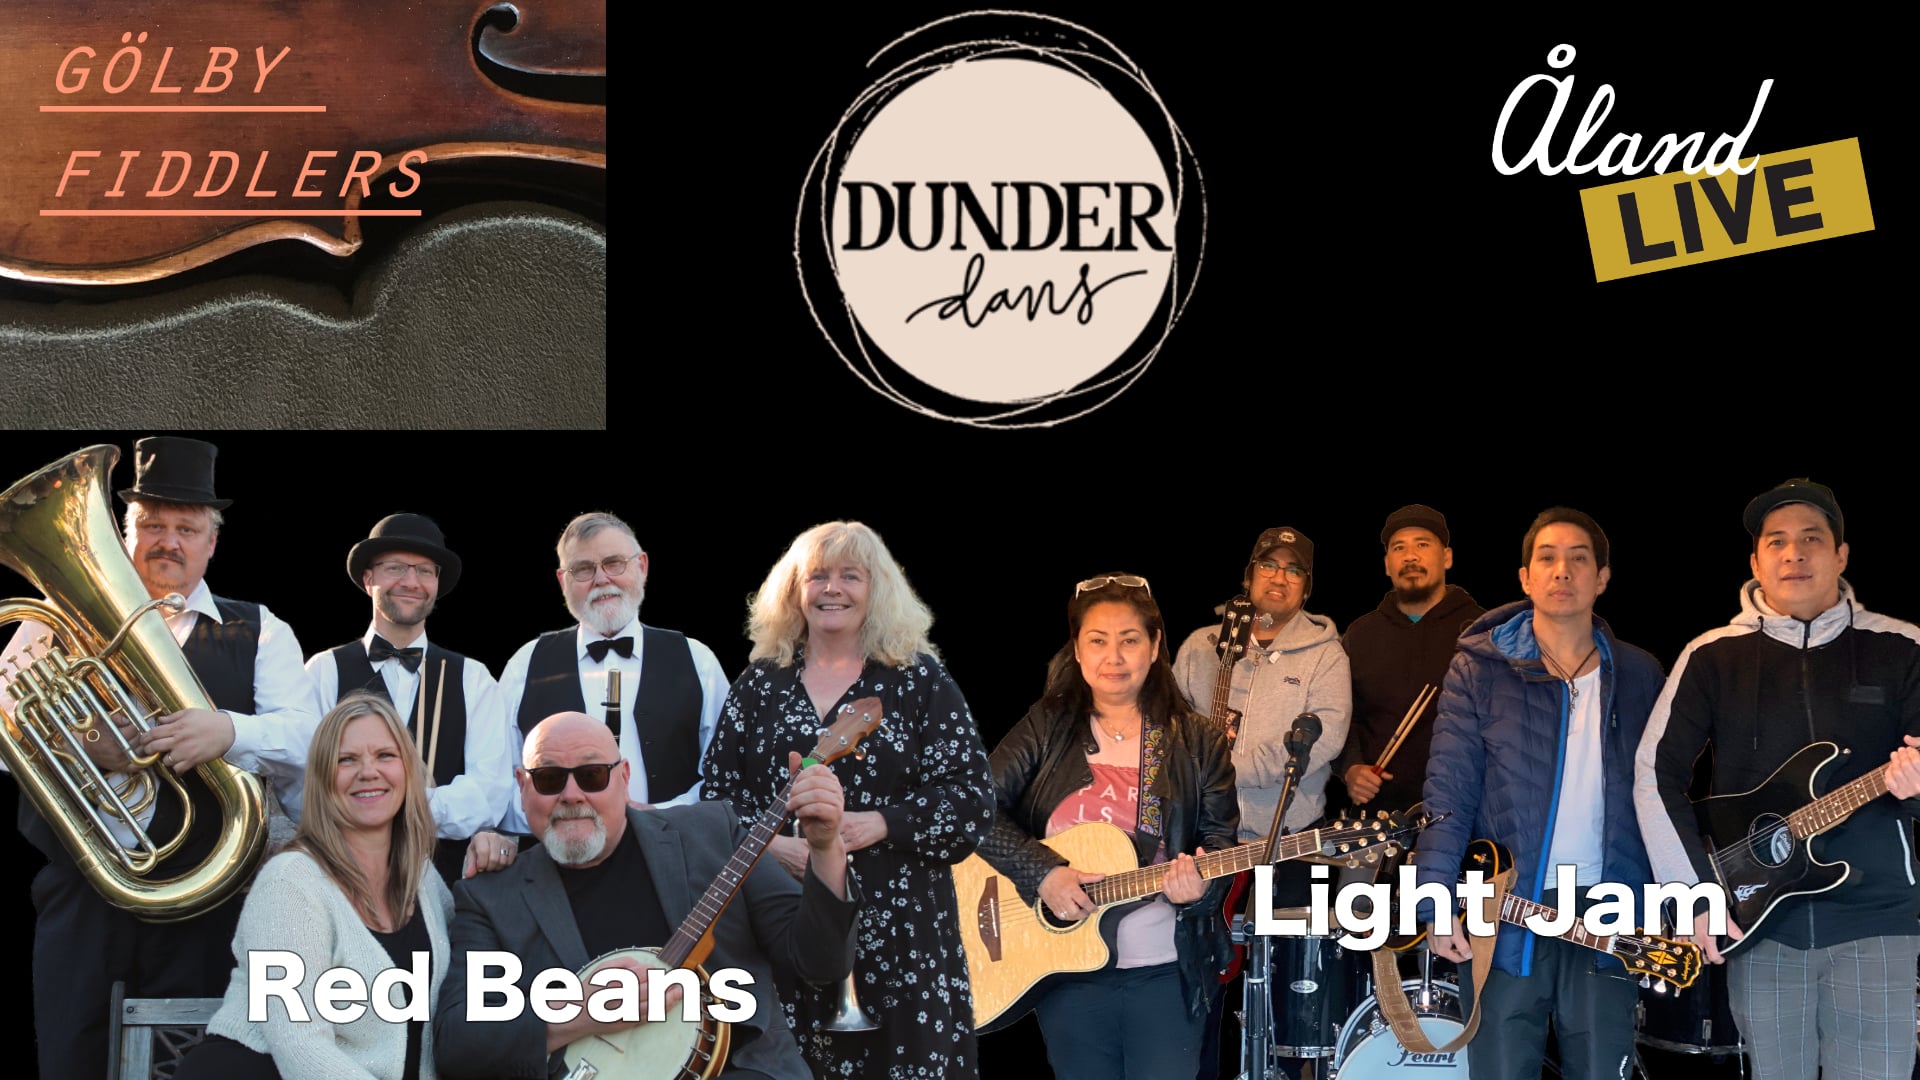 ÅlandLIVE - Gölby Fiddlers, Light JAM, Dunderdans & Red Beans